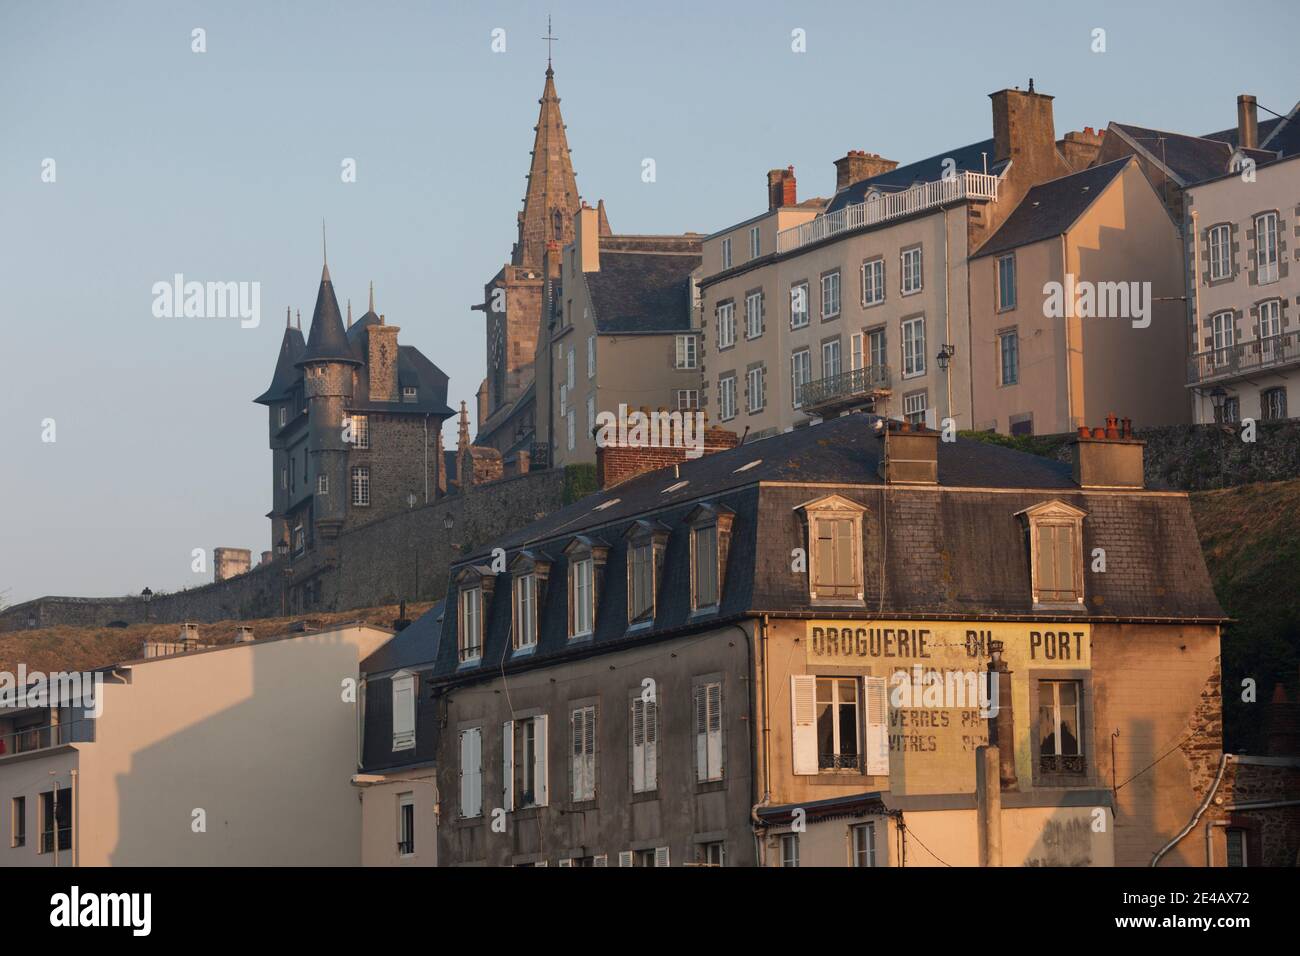 Buildings in a city, Hauteville-sur-Mer, Granville, Manche, Normandy, France Stock Photo